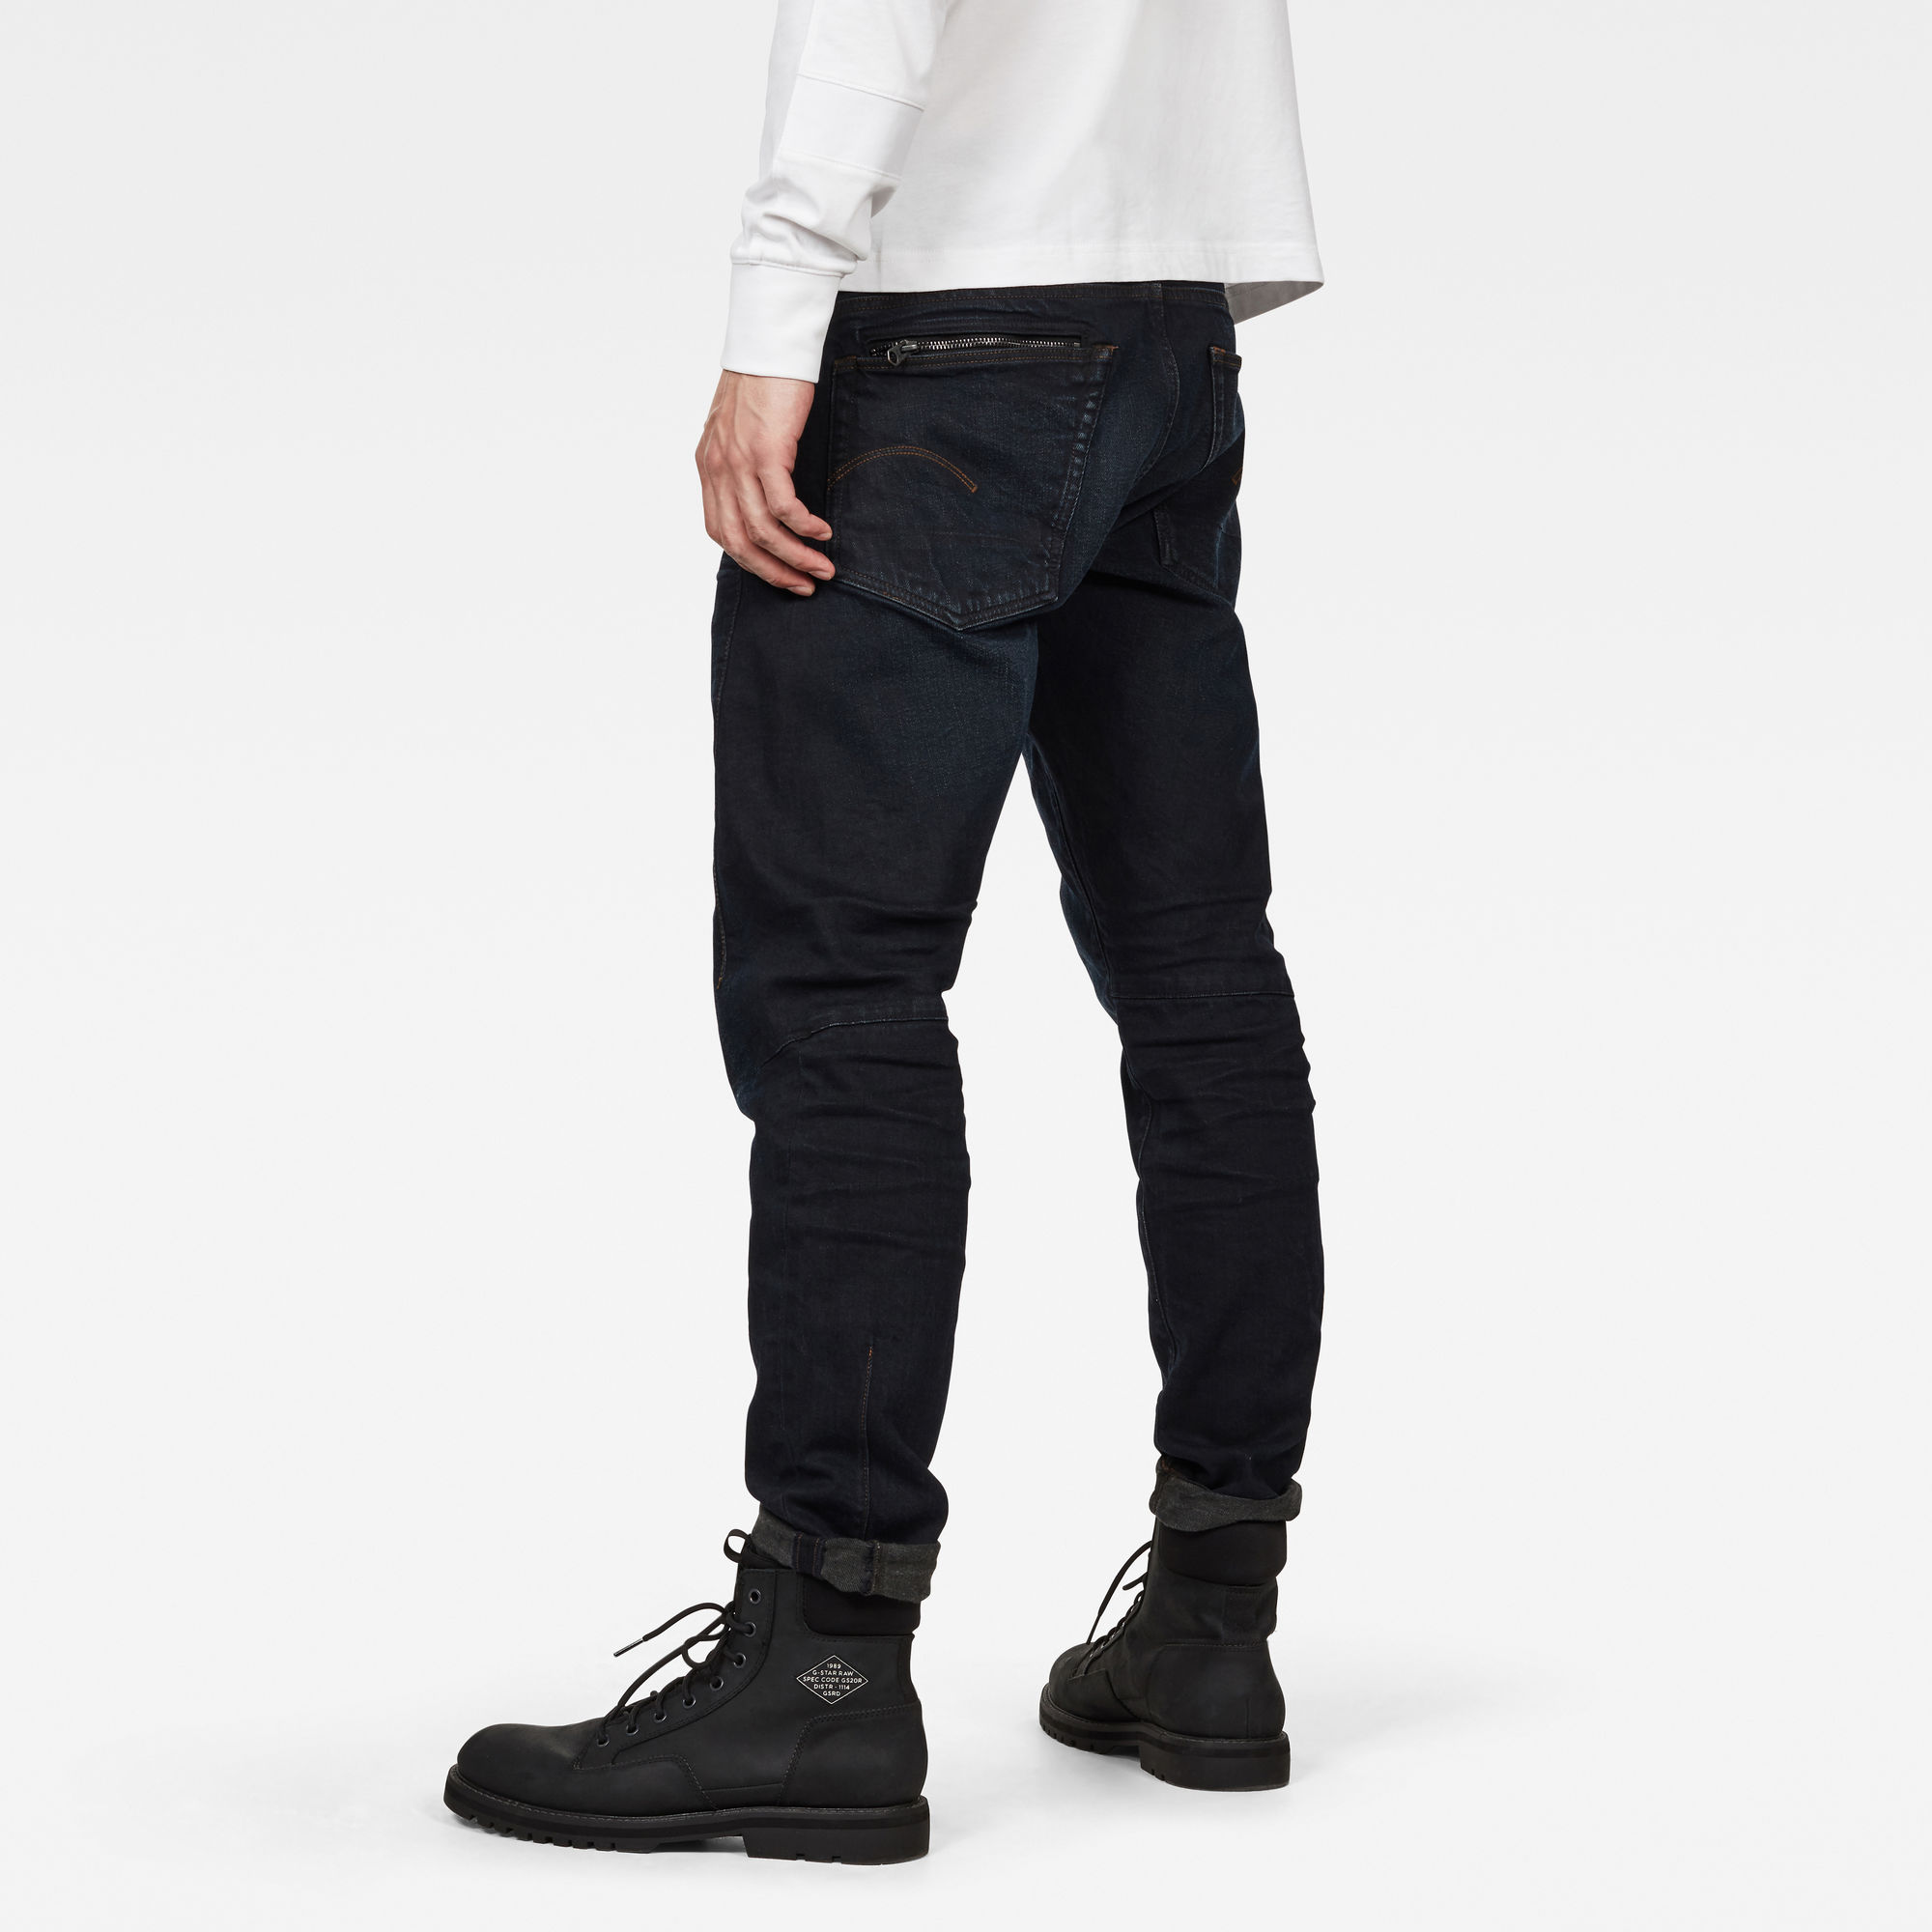 Citishield 3D Slim Tapered Jeans | Dark blue | G-Star RAW®